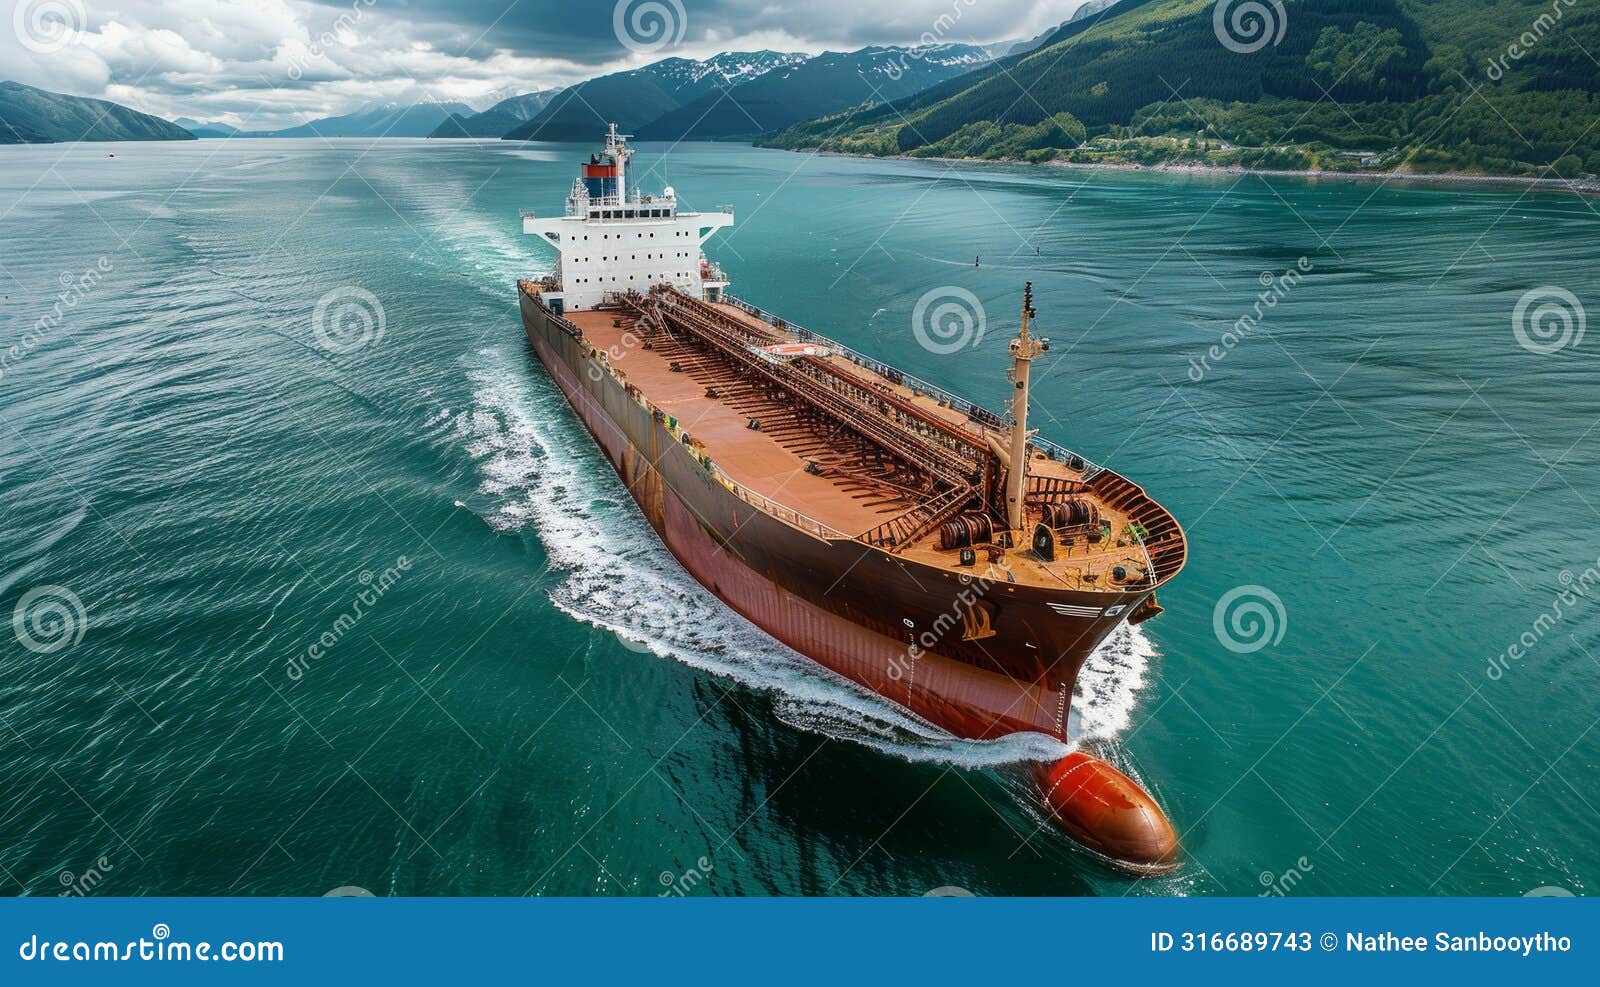 bulk carrier ship sailing in mountainous region